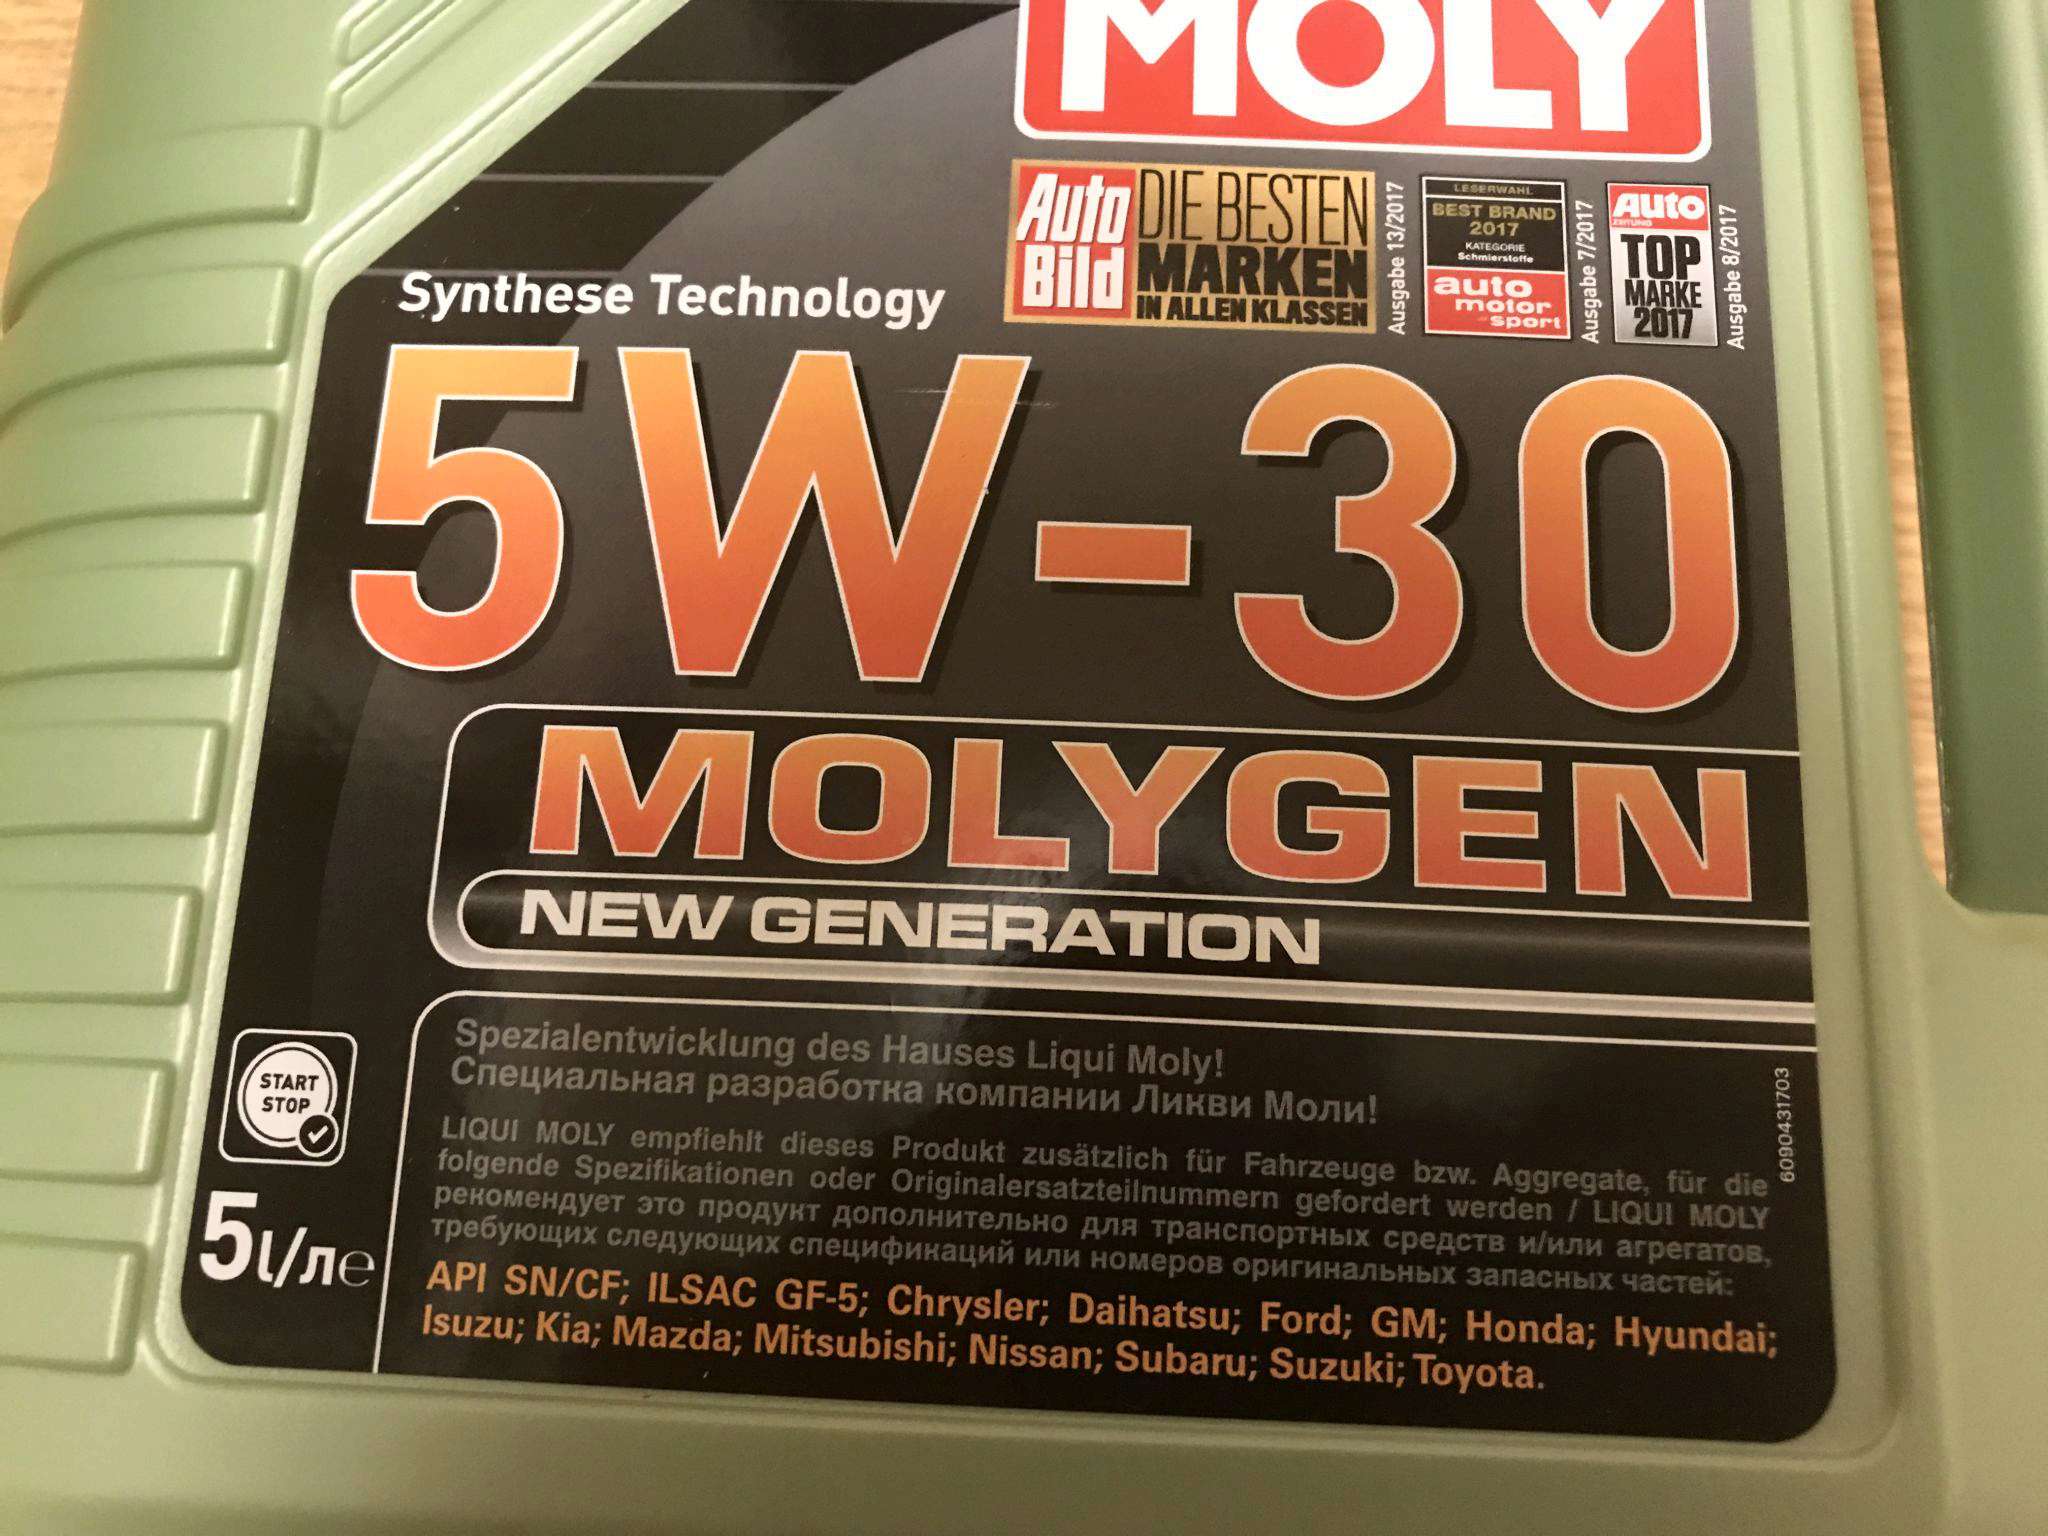 Масло ликви моли 5w30 молиген. Масло моторное Liqui Moly Molygen New Generation 5w30. Масло моторное Liqui Moly Molygen 5w-30. Liqui Moly 5 30 молиген.